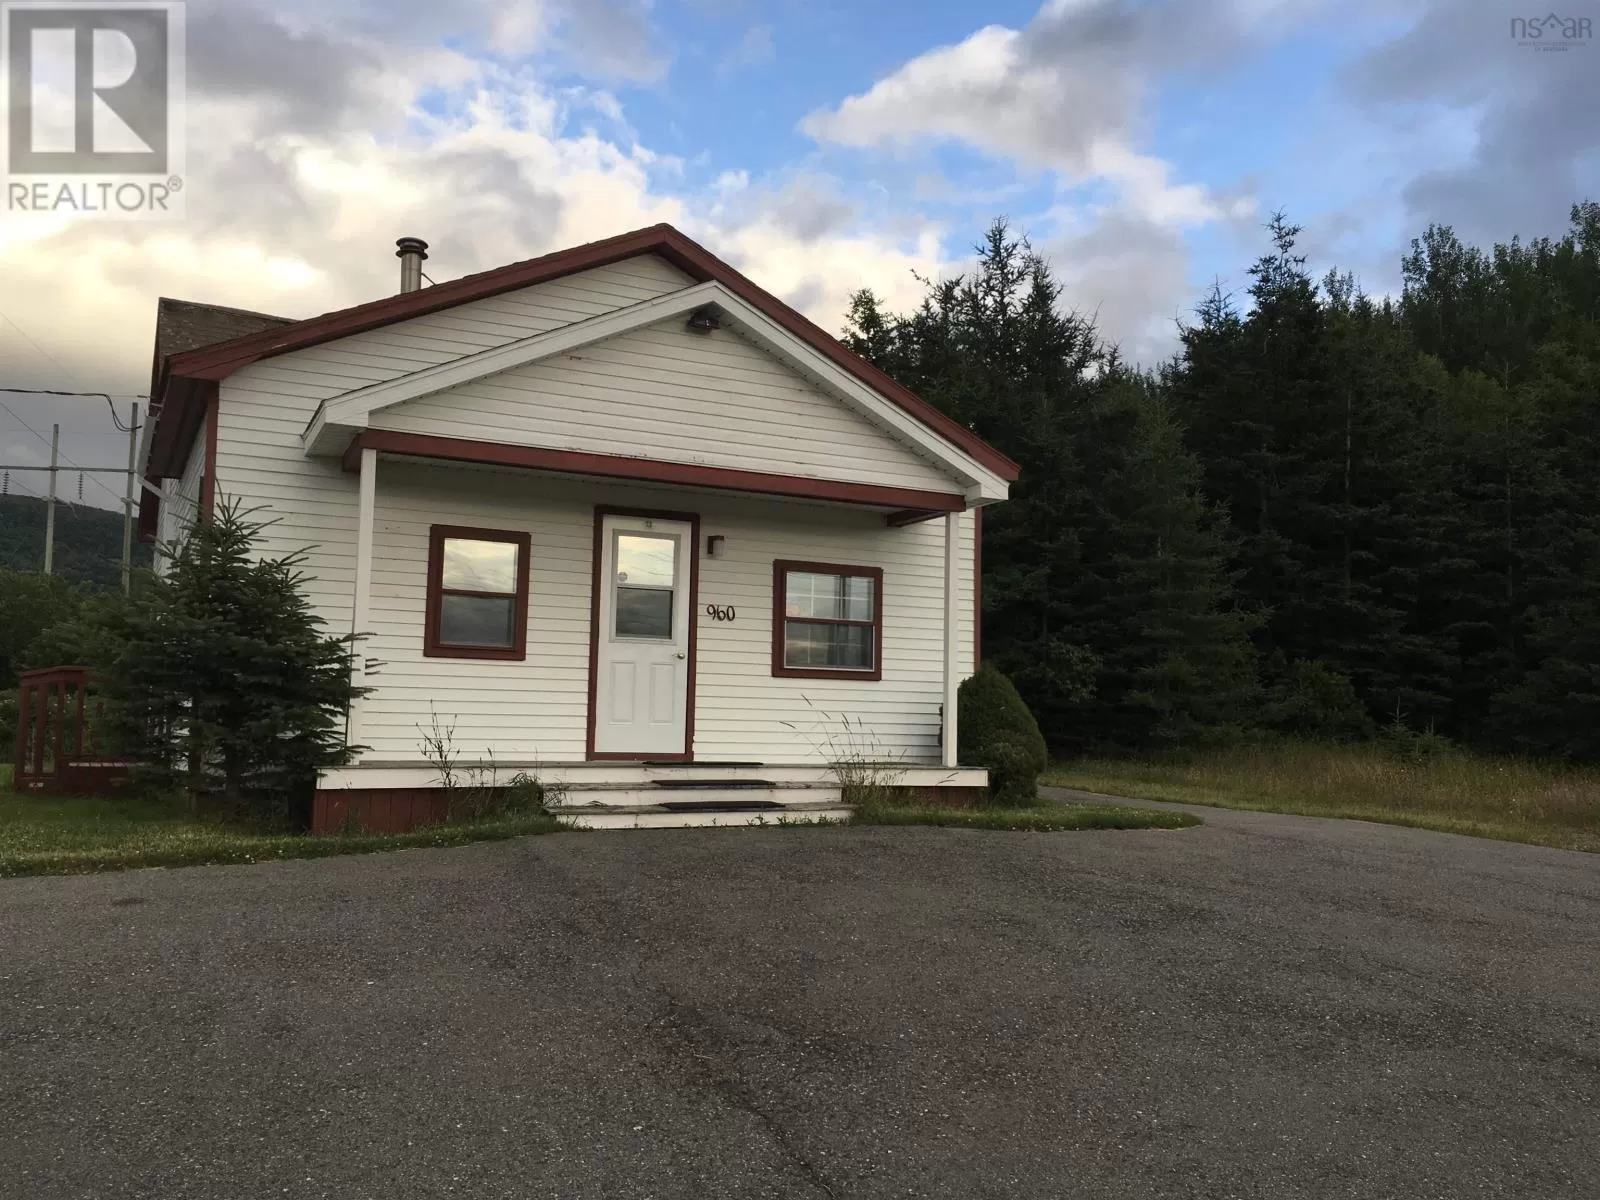 House for rent: 960 Cheticamp Back Road, Belle Marche, Nova Scotia B0E 1H0